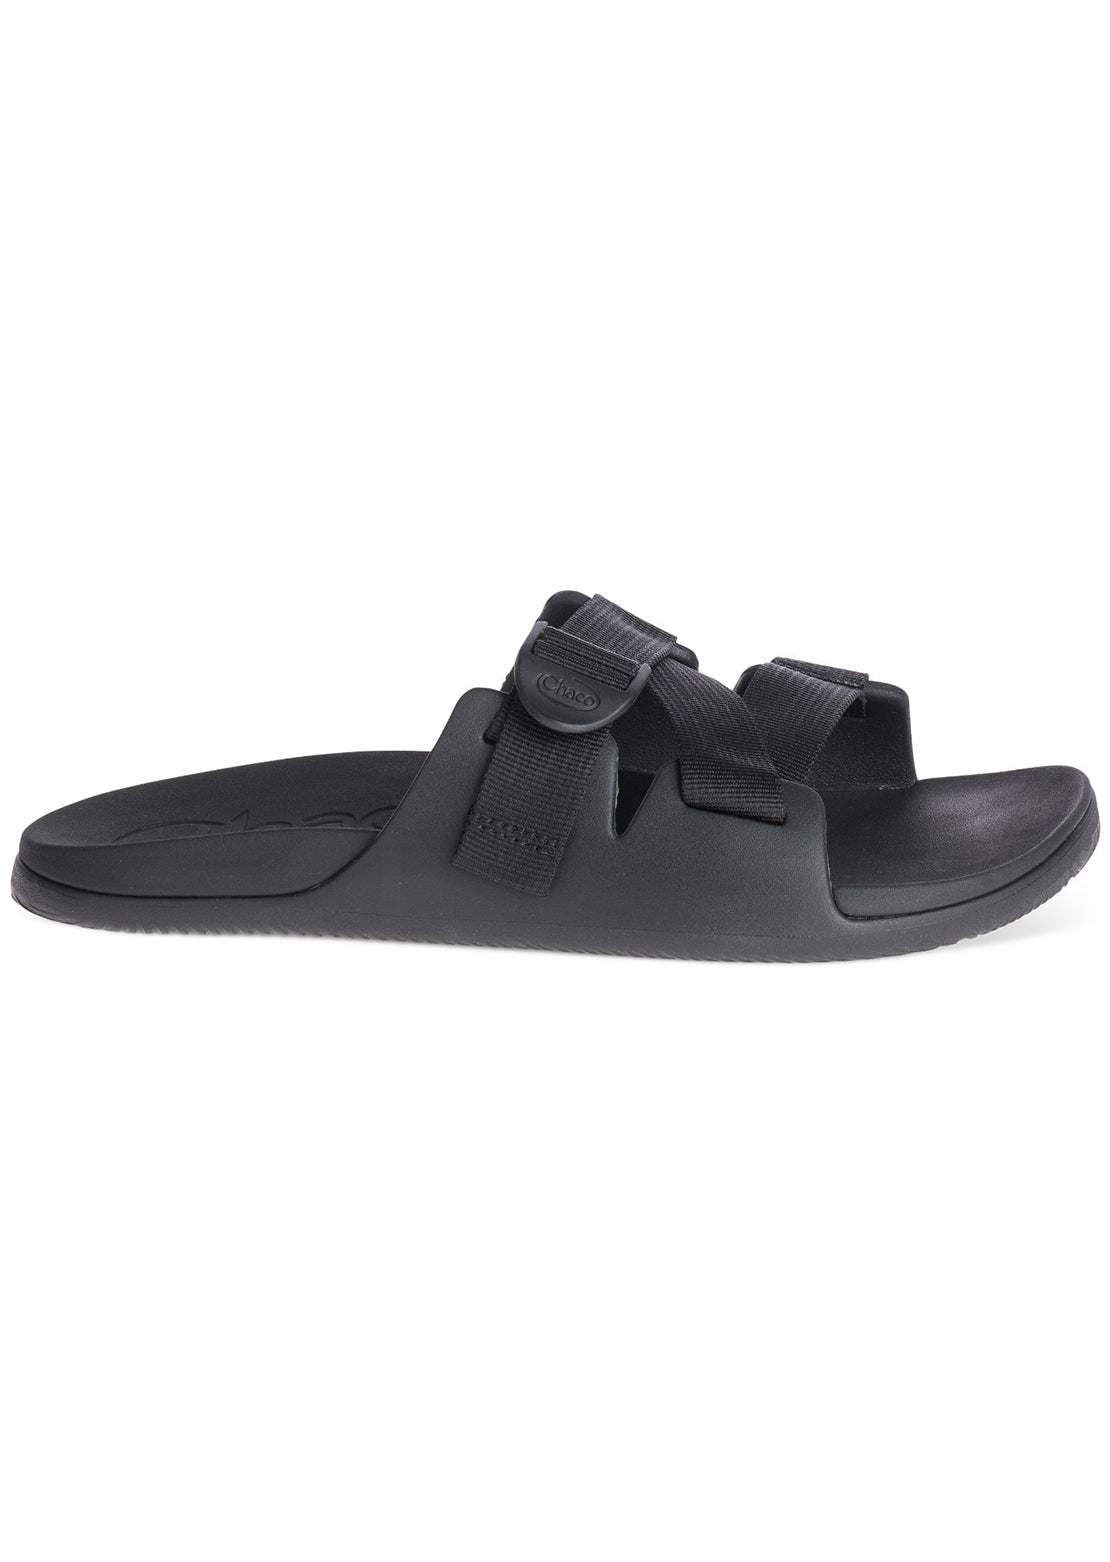 Chaco Men’s Chillos Slide Sandals Black